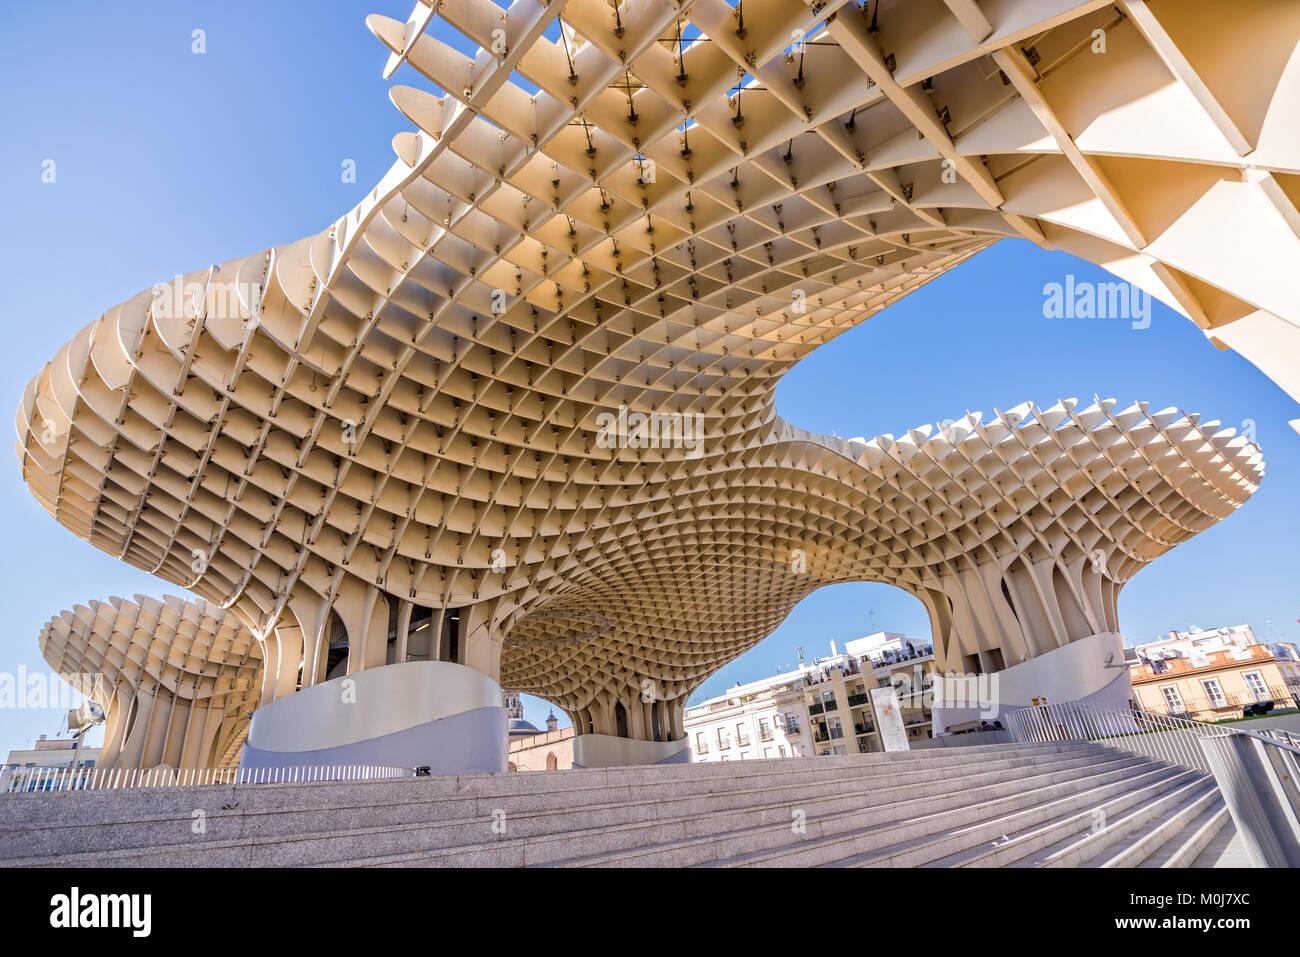 Sevilla, Spanien - 0 Oktober 30: Metropol Parasol, moderne Architektur auf der Plaza de la Encarnacion am 30. Oktober 2015 in Sevilla Stockfoto